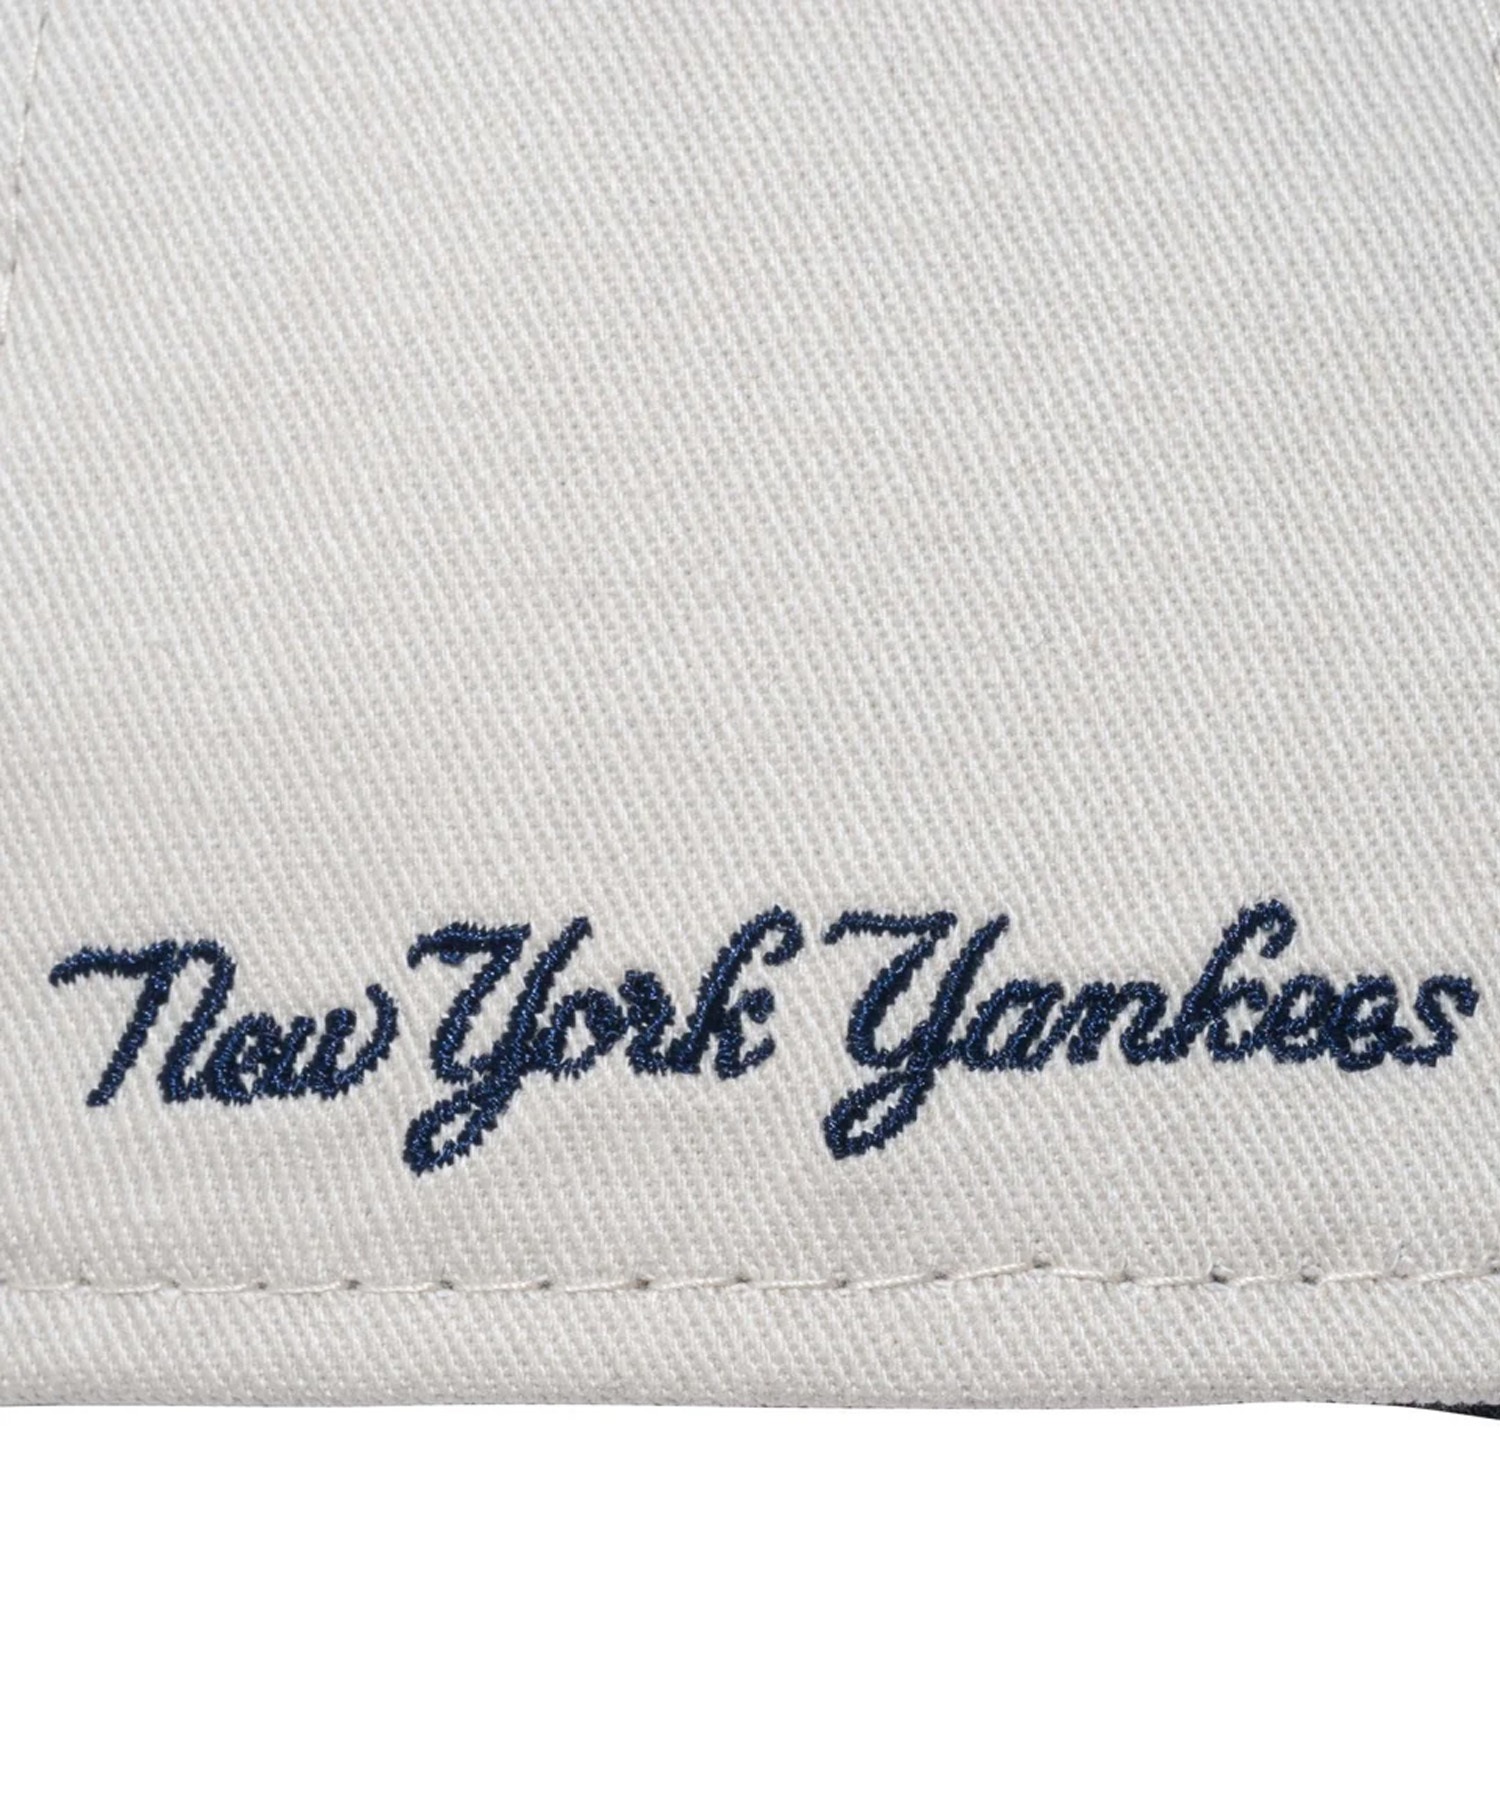 NEW ERA ニューエラ My 1st 9TWENTY 2-Tone ニューヨーク・ヤンキース ストーン ネイビーバイザー キッズ ベビー キャップ 帽子 14111976(ONECOLOR-ONESIZE)